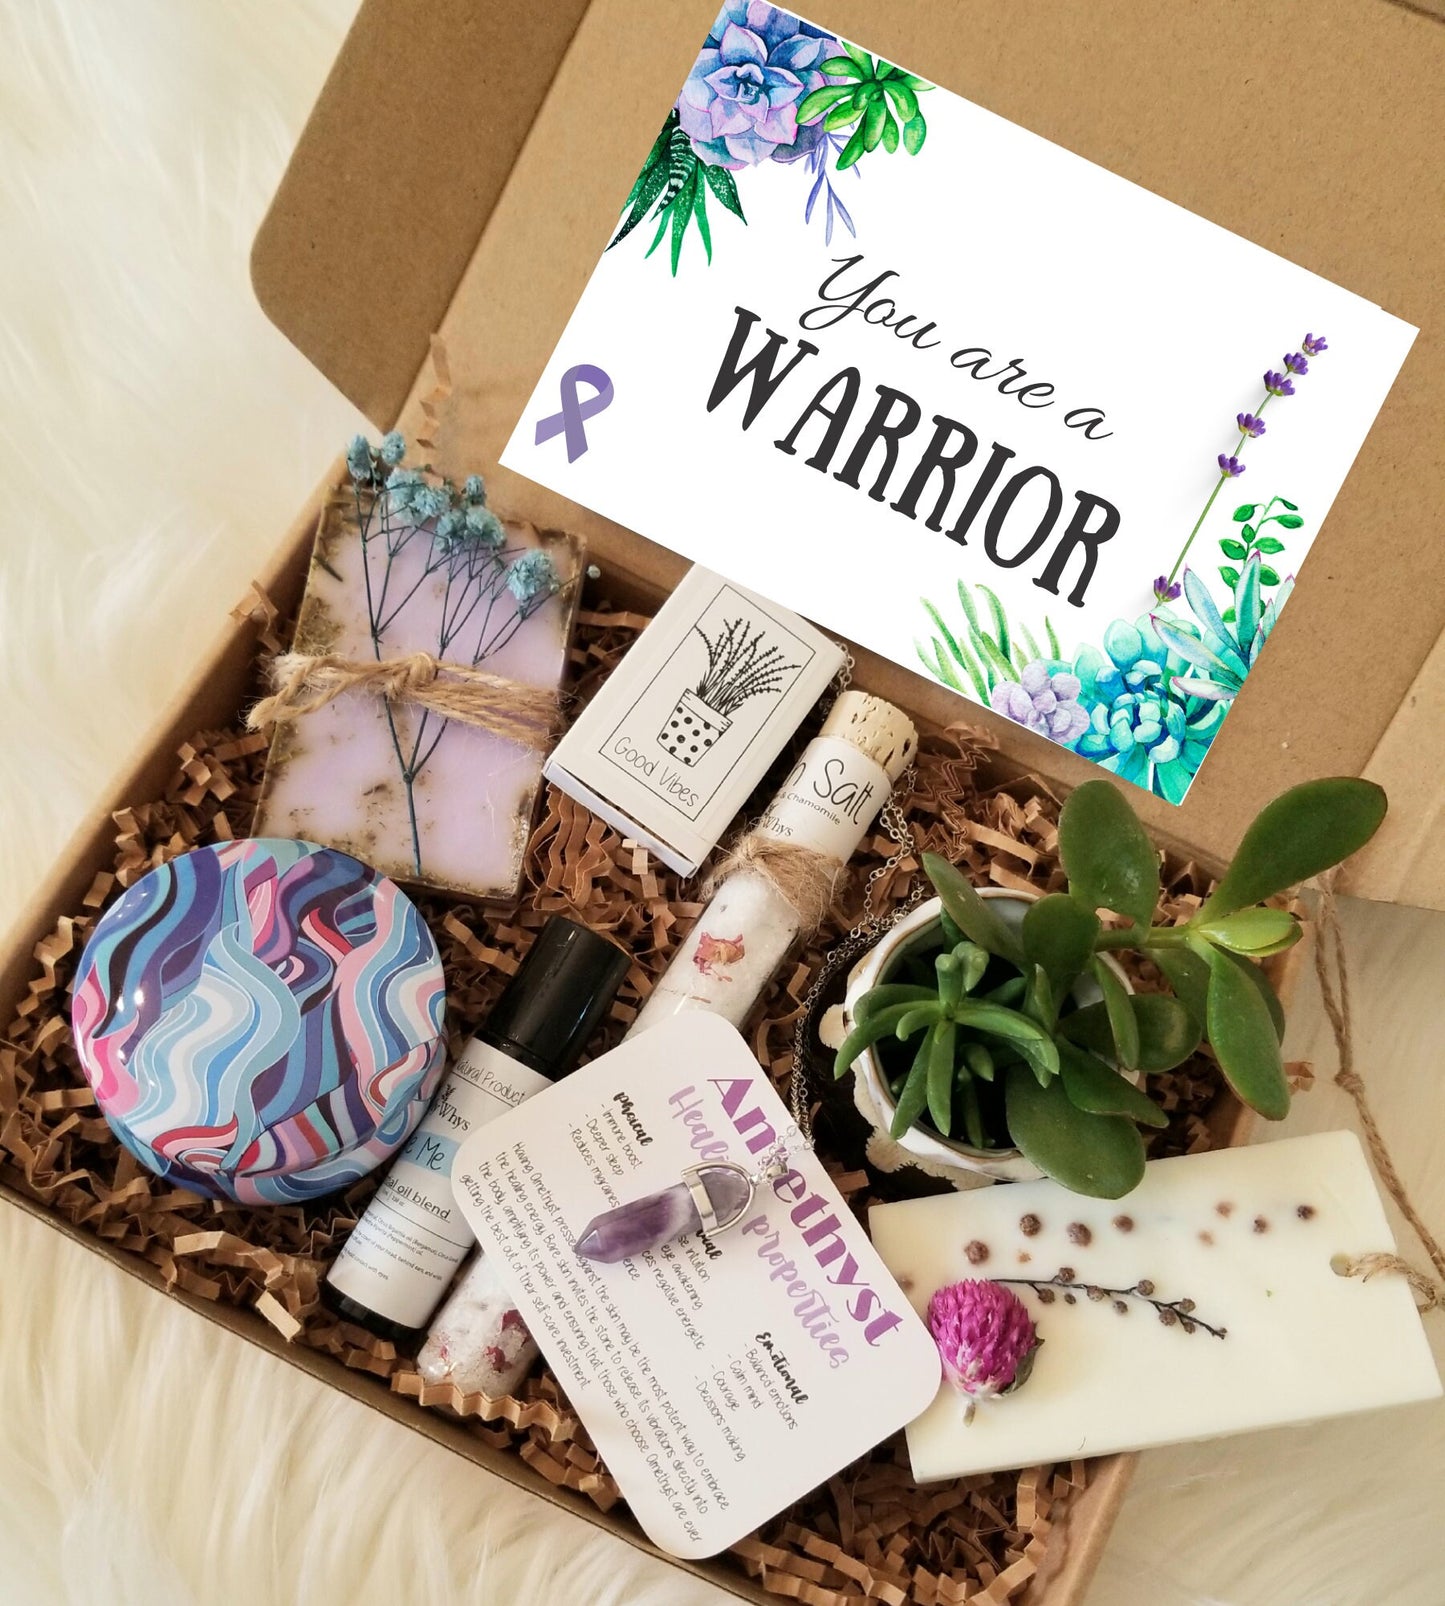 Warrior gift set, fighter gift box, breast cancer survivor care package